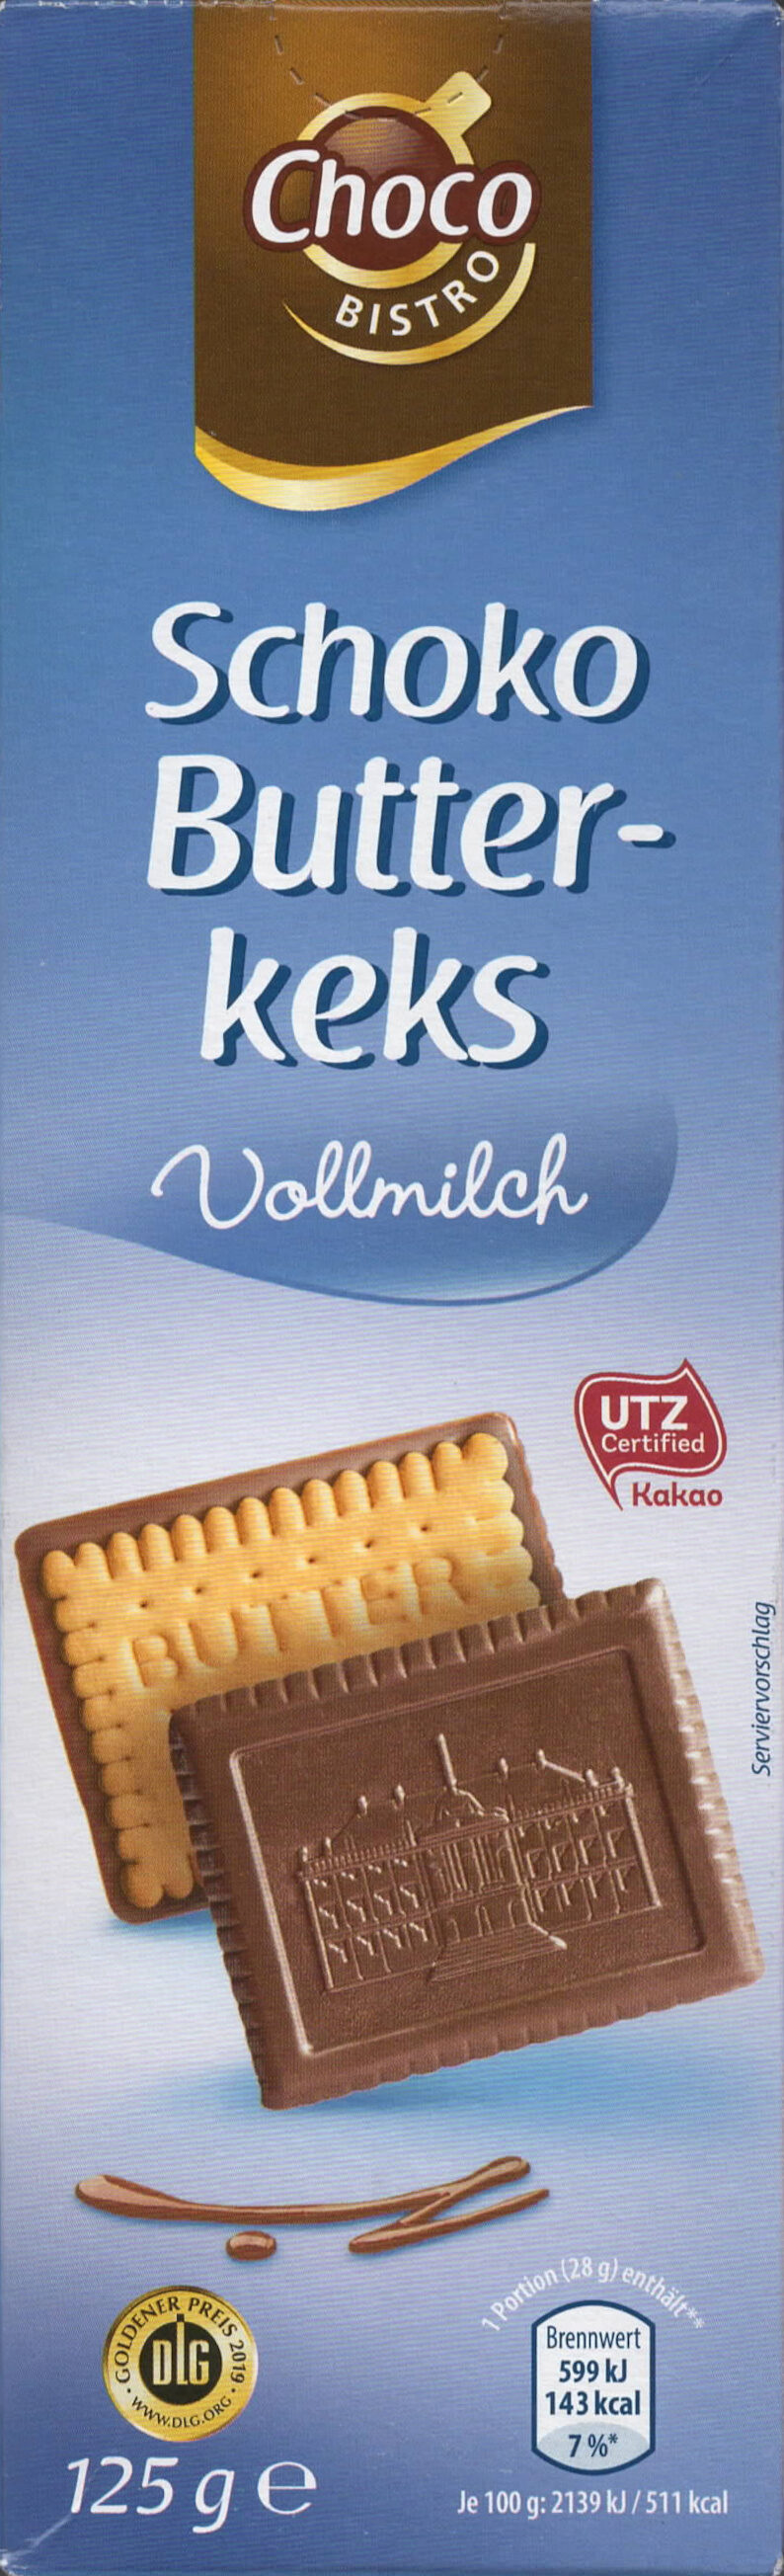 Schoko Butterkeks Vollmilch - Product - de